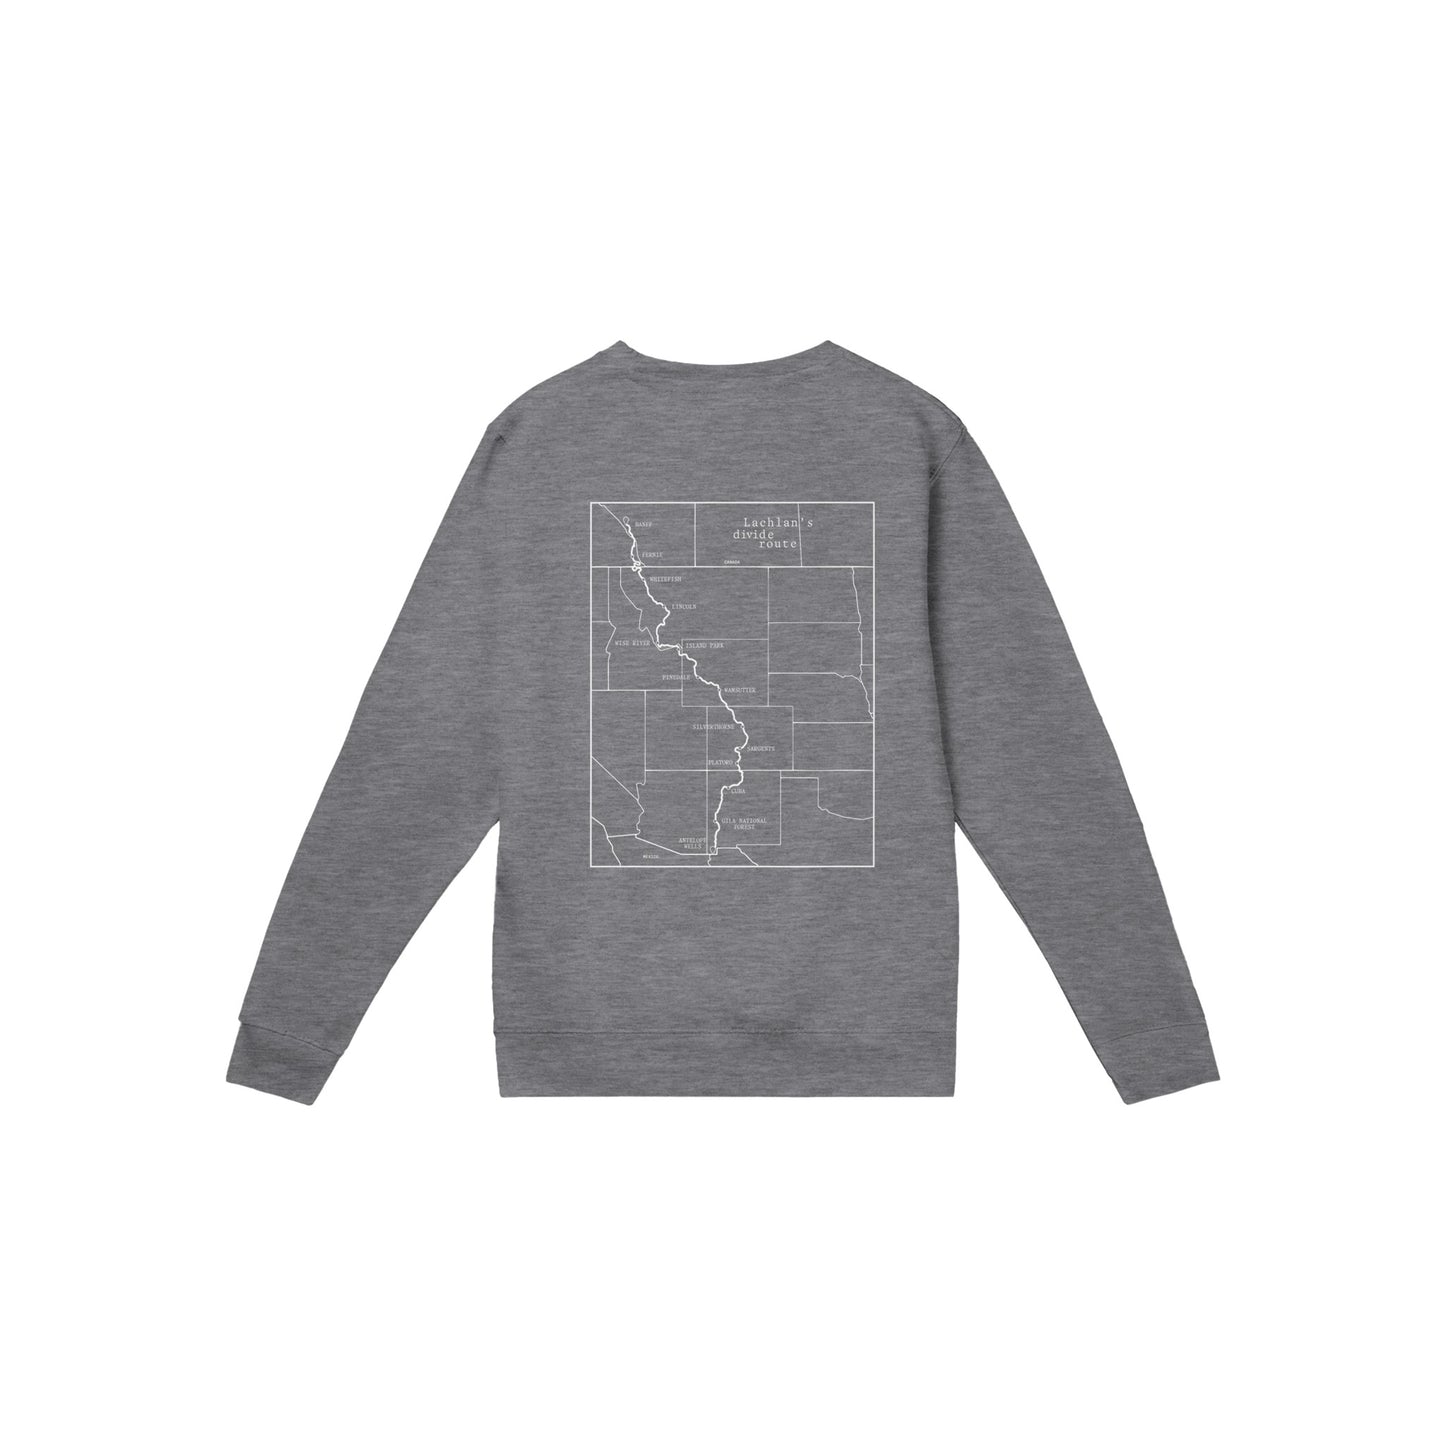 The Divide - Route - Sweatshirt